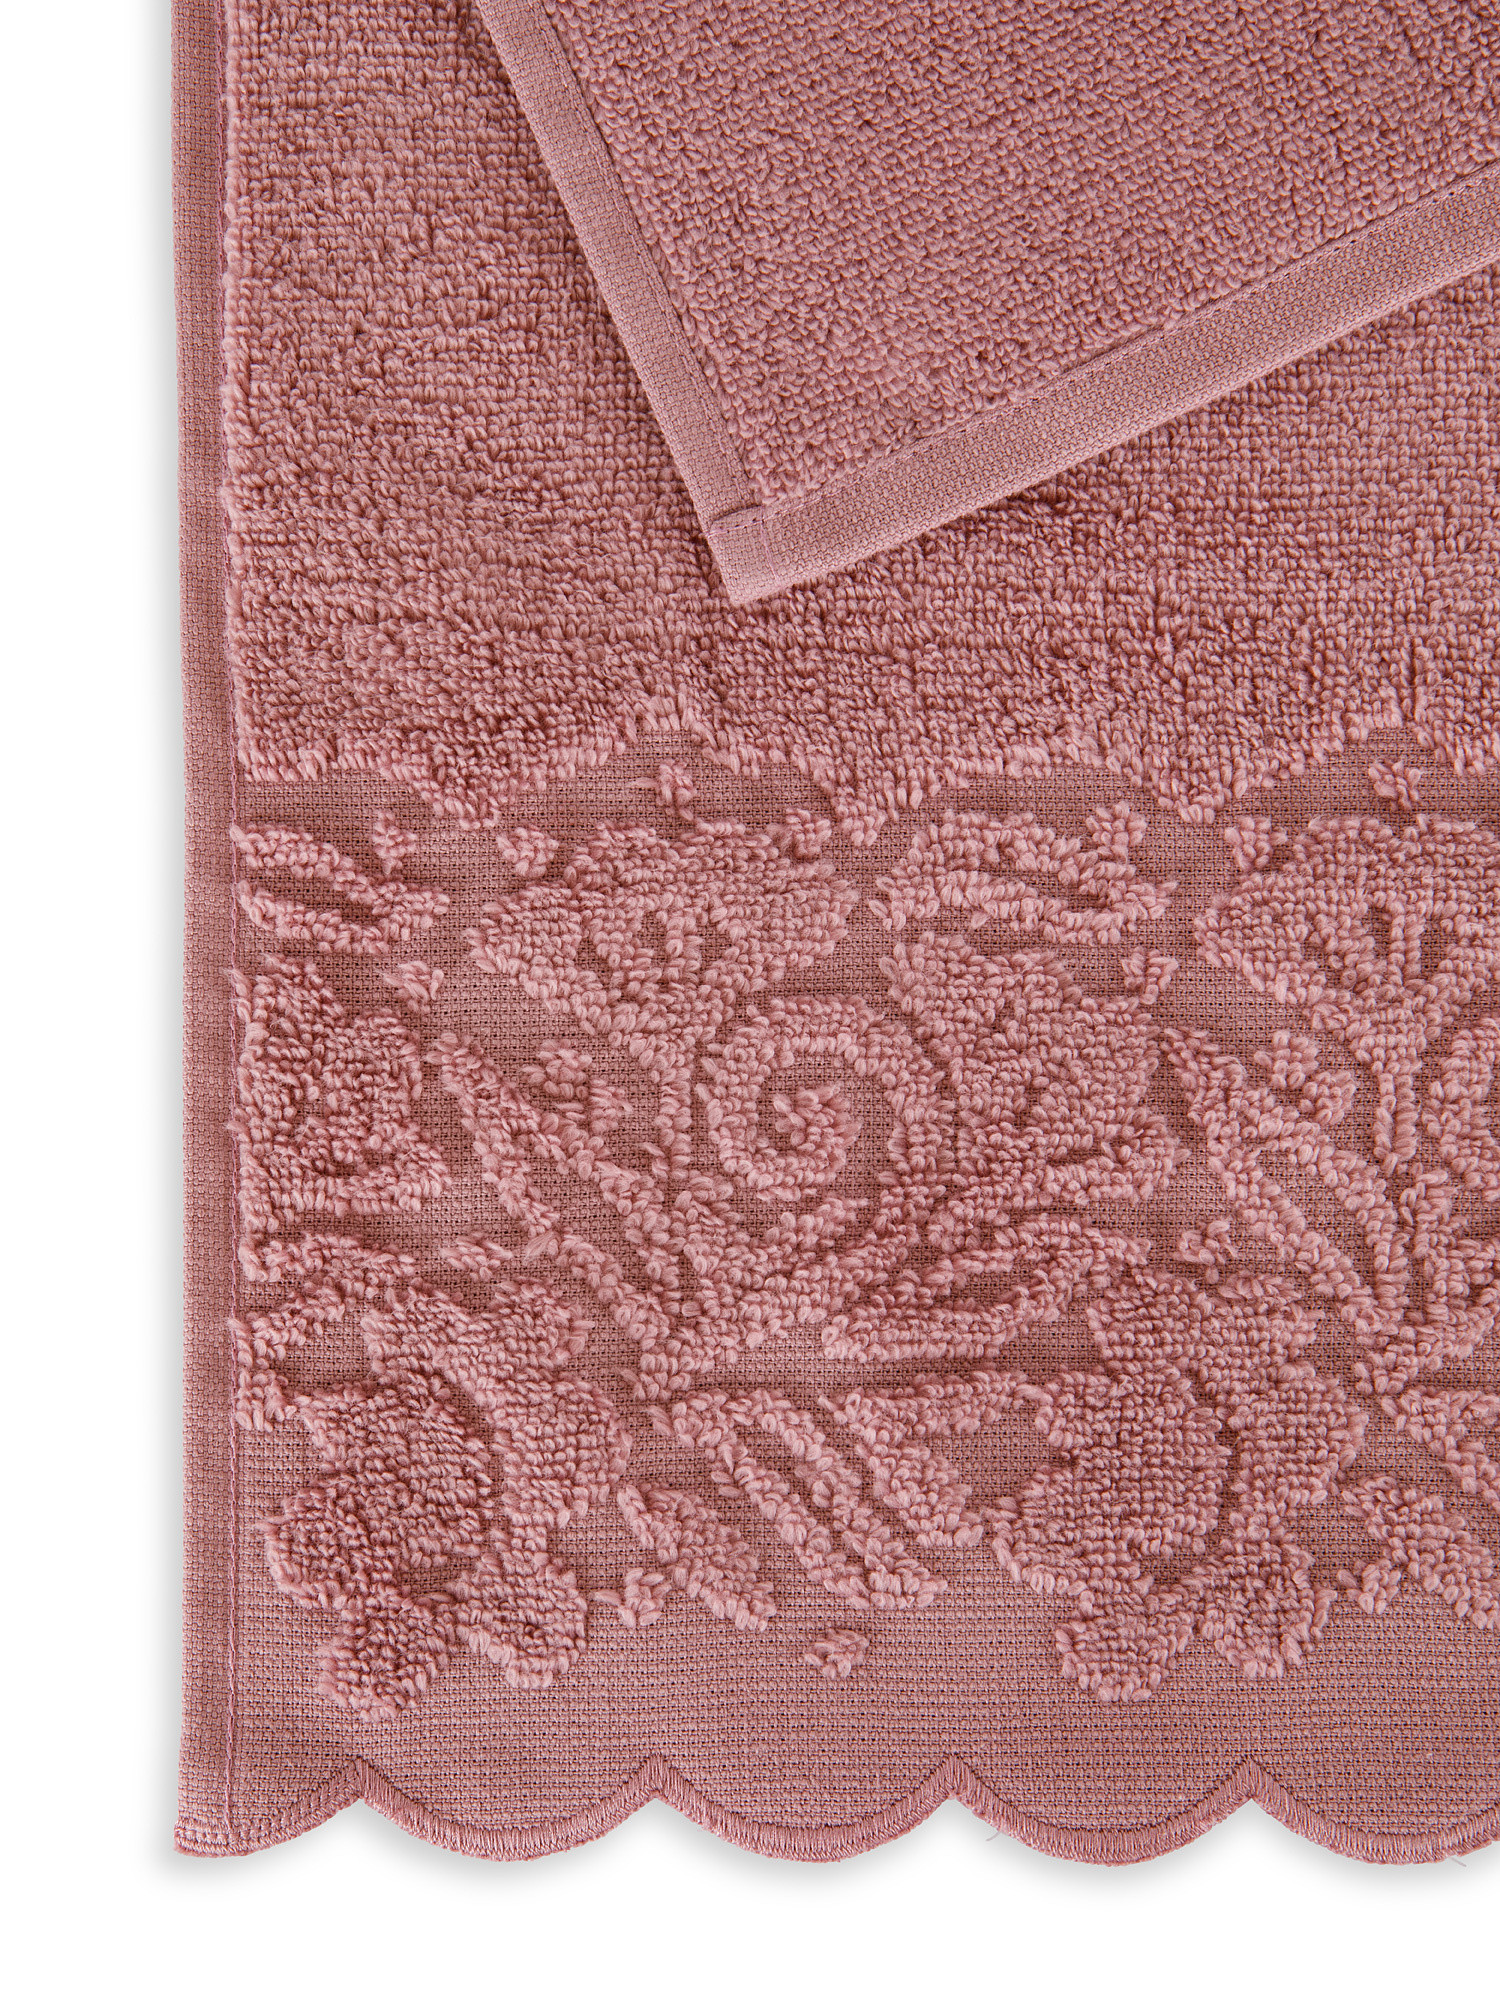 Asciugamano puro cotone bordo jacquard, Rosa, large image number 2